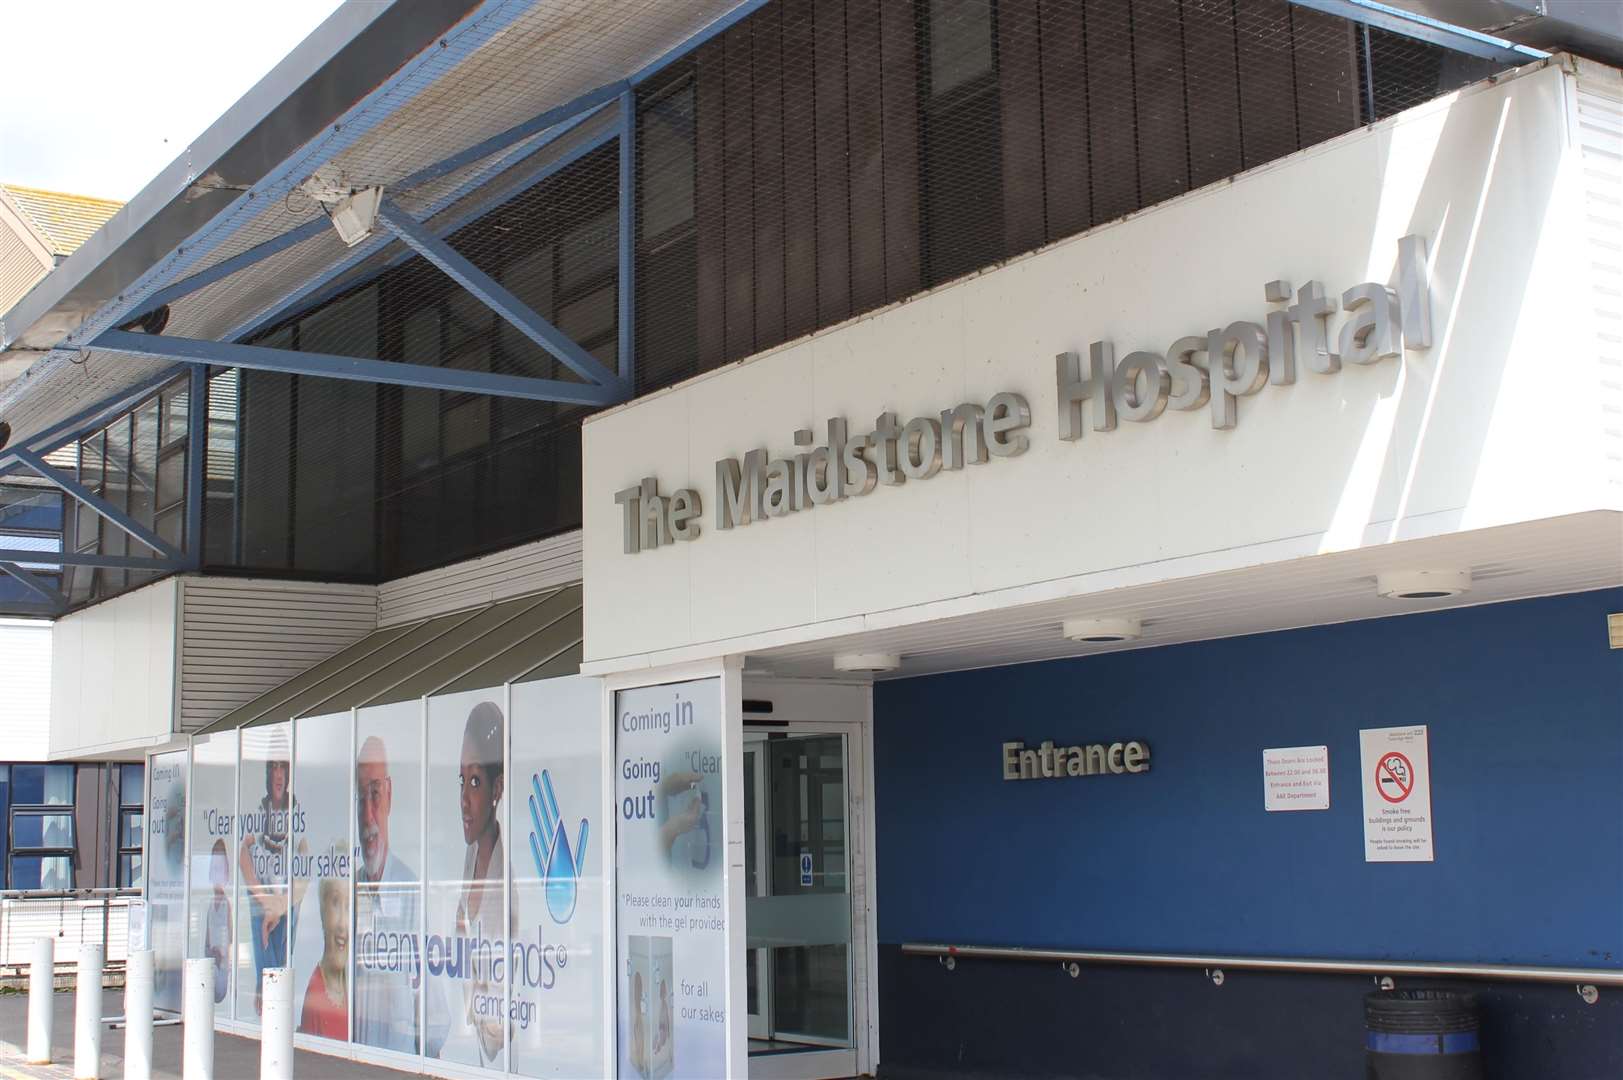 Maidstone Hospital, part of Maidstone and Tunbridge Wells NHS Trust